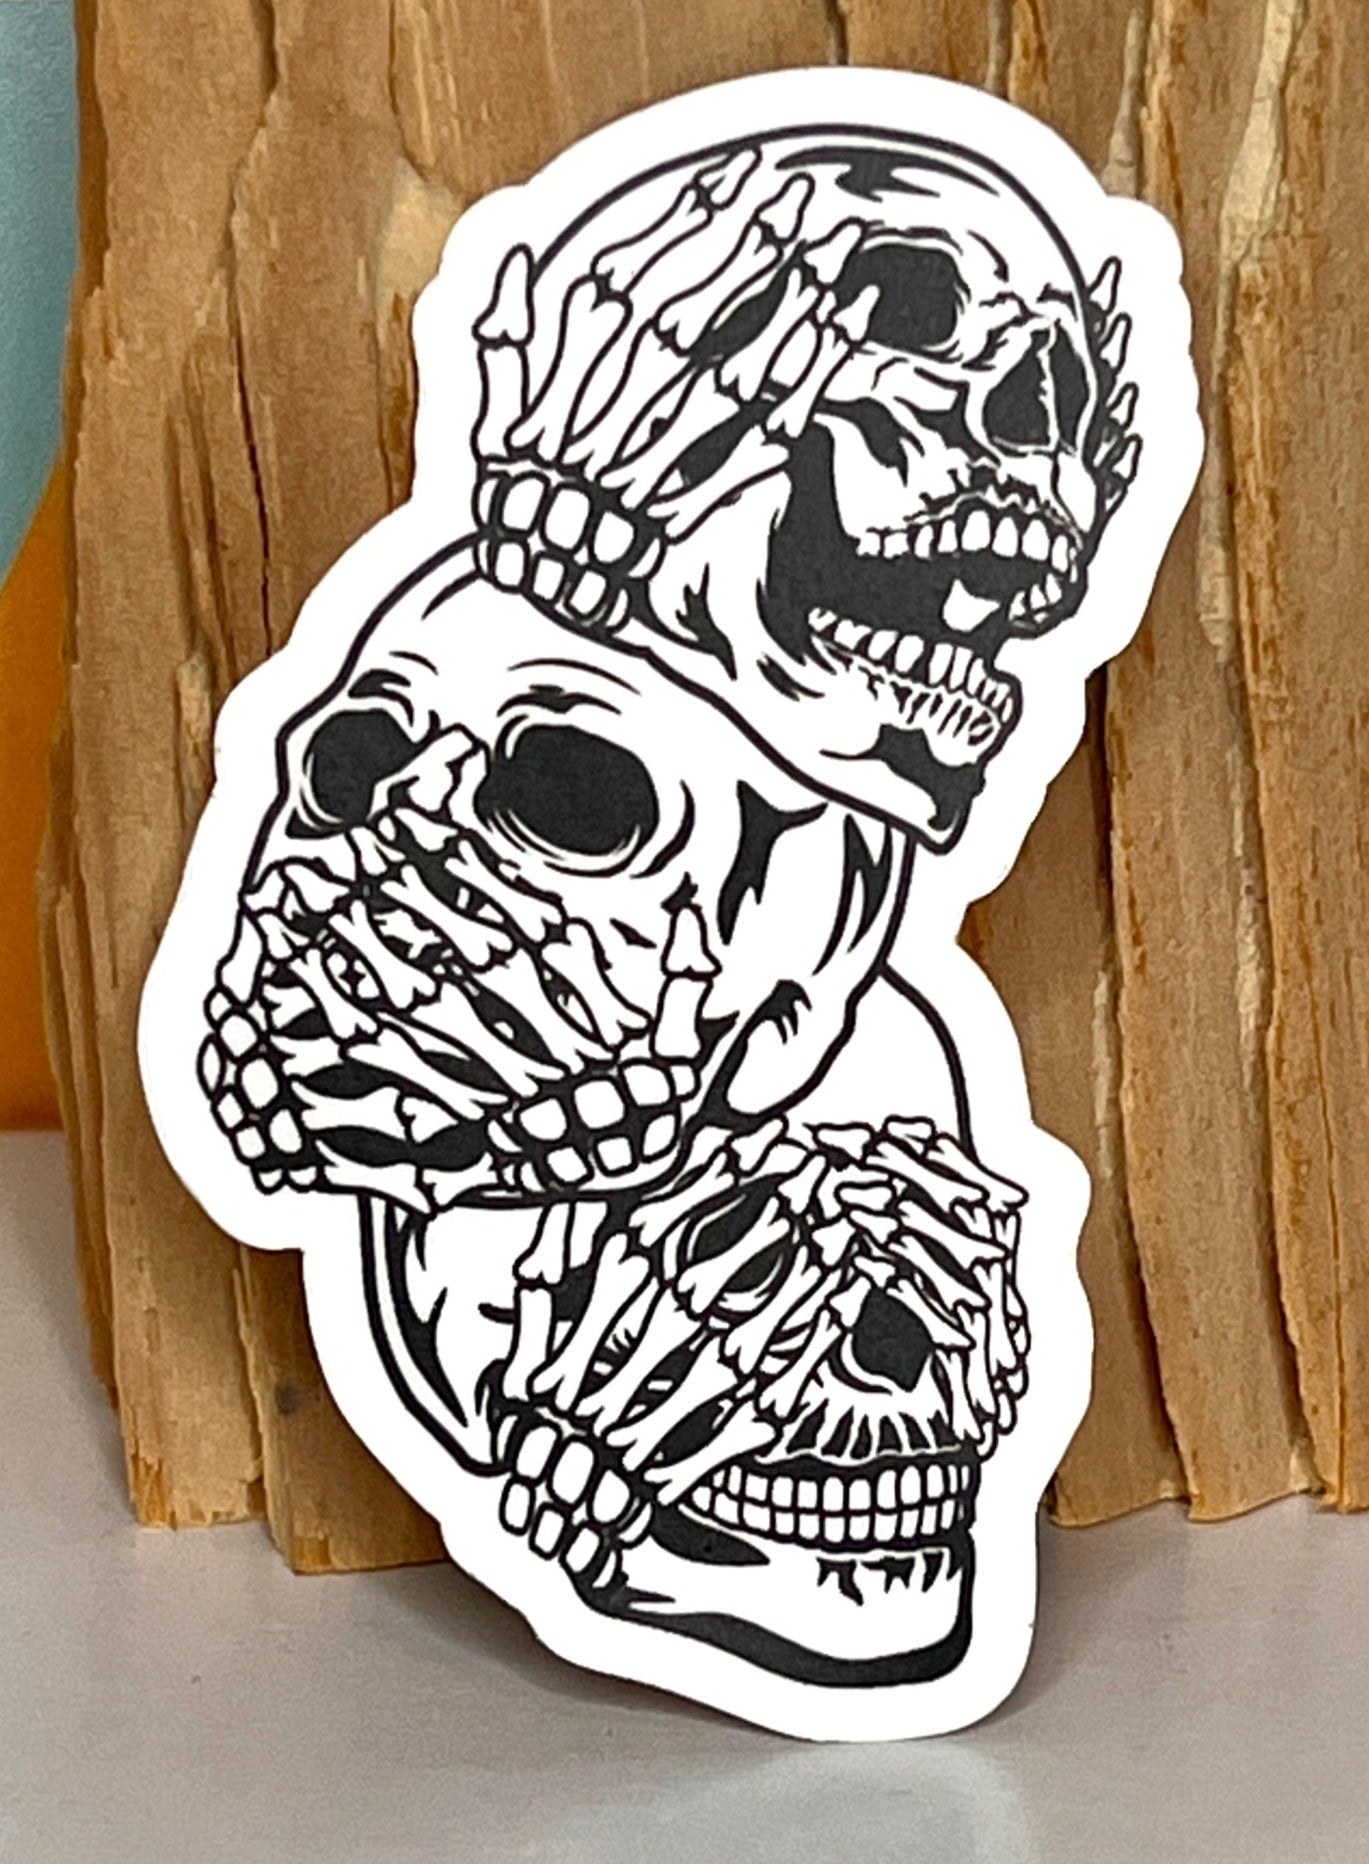 Hear No, See No, Speak No Evil Skeletons Waterproof Sticker Decal